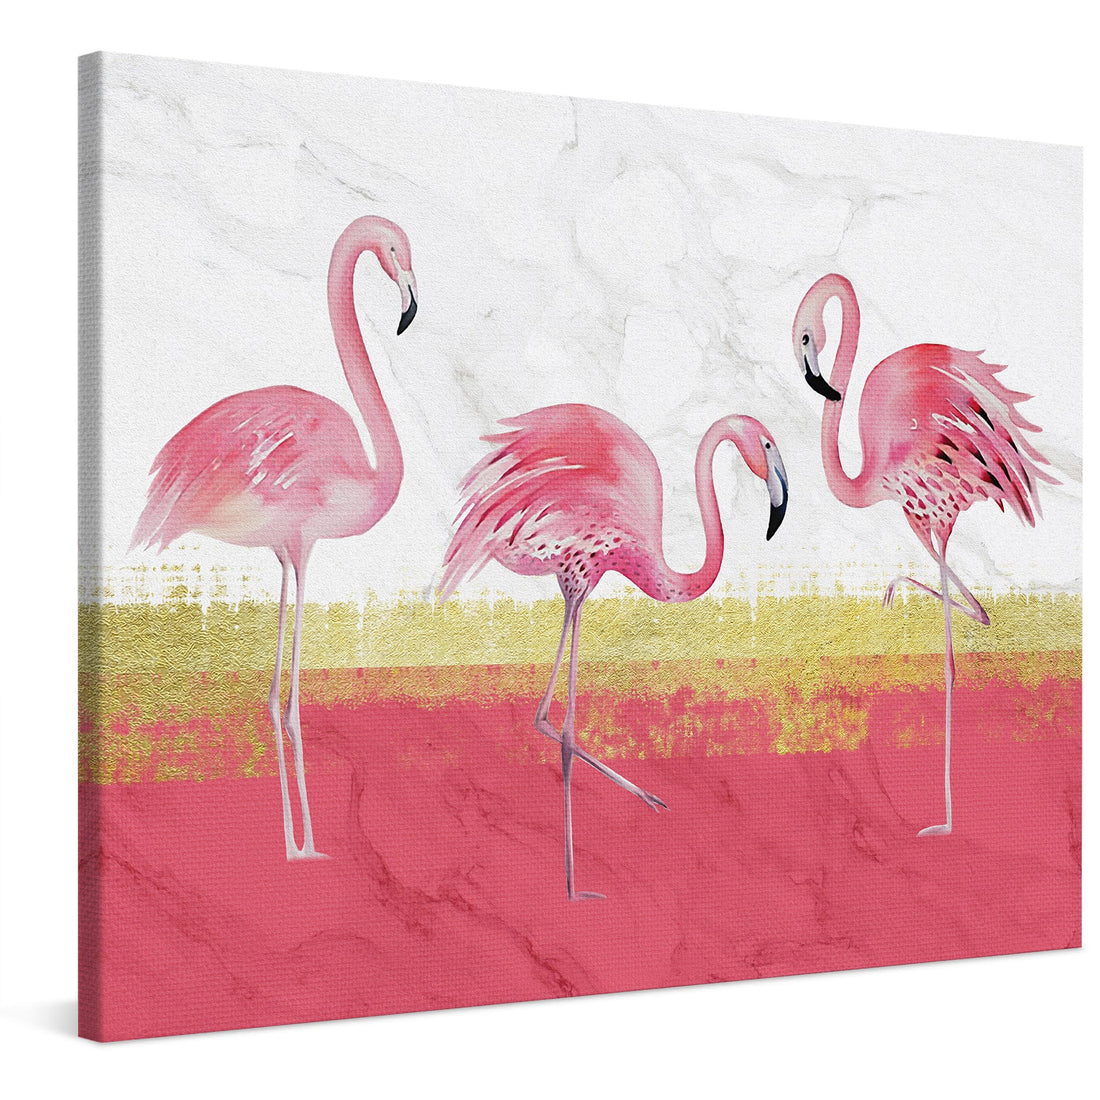 Copy of Crimson Flamingo Dance 00236